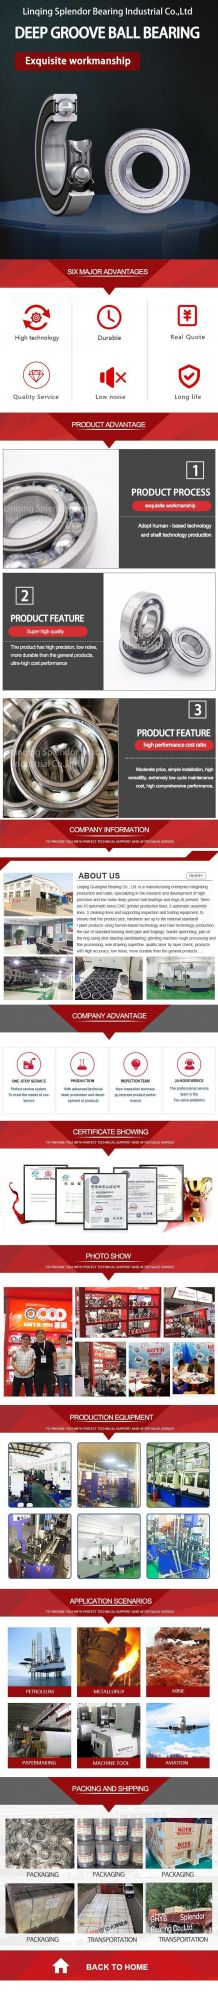 China Factory Distributor Supplier of Deep Groove Ball Bearings for Motors, Compressors, Alternators 6314-2rz/P6/Z2V2